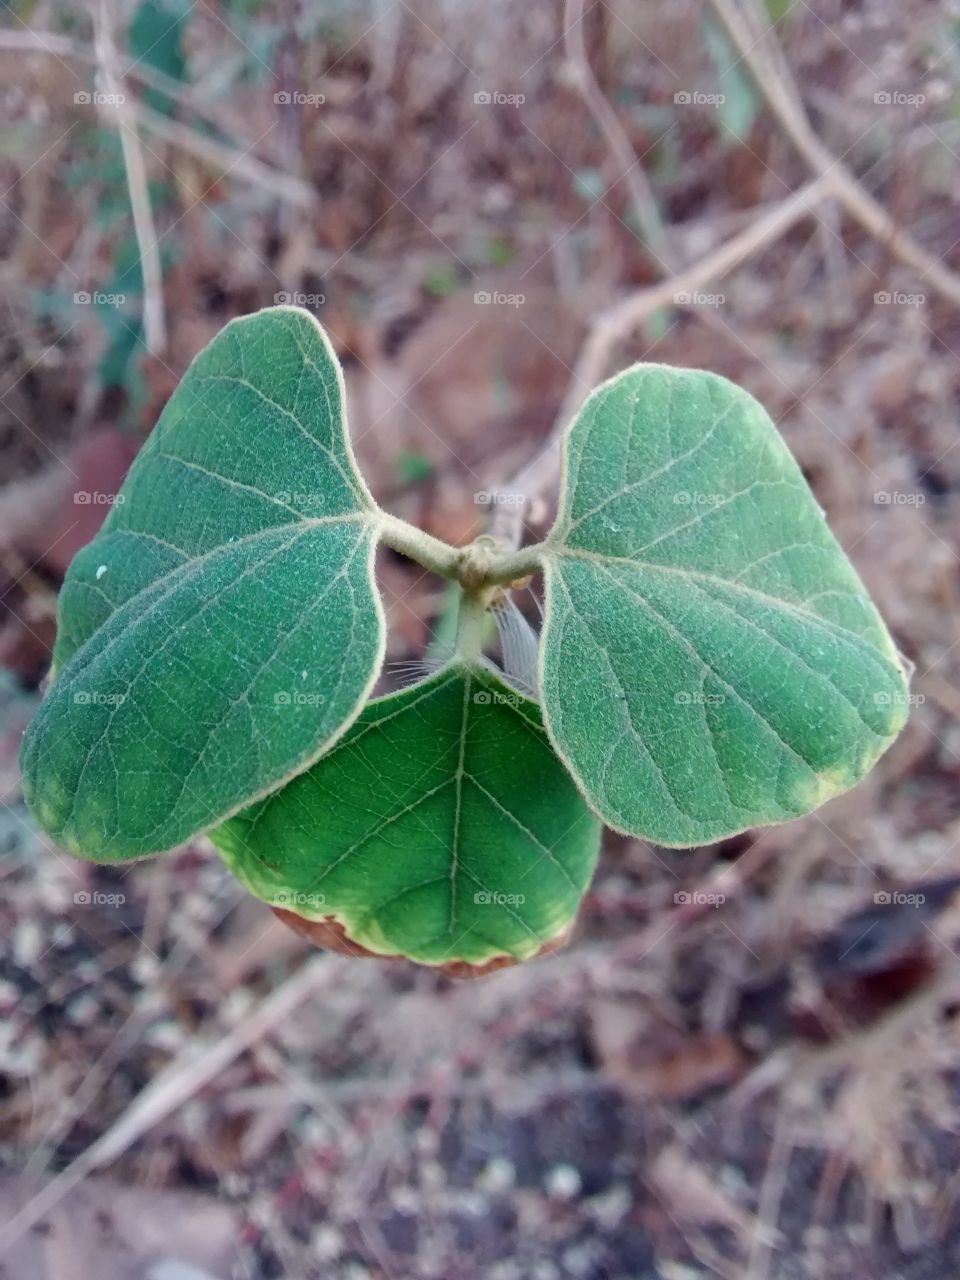 green leaf looking beautiful